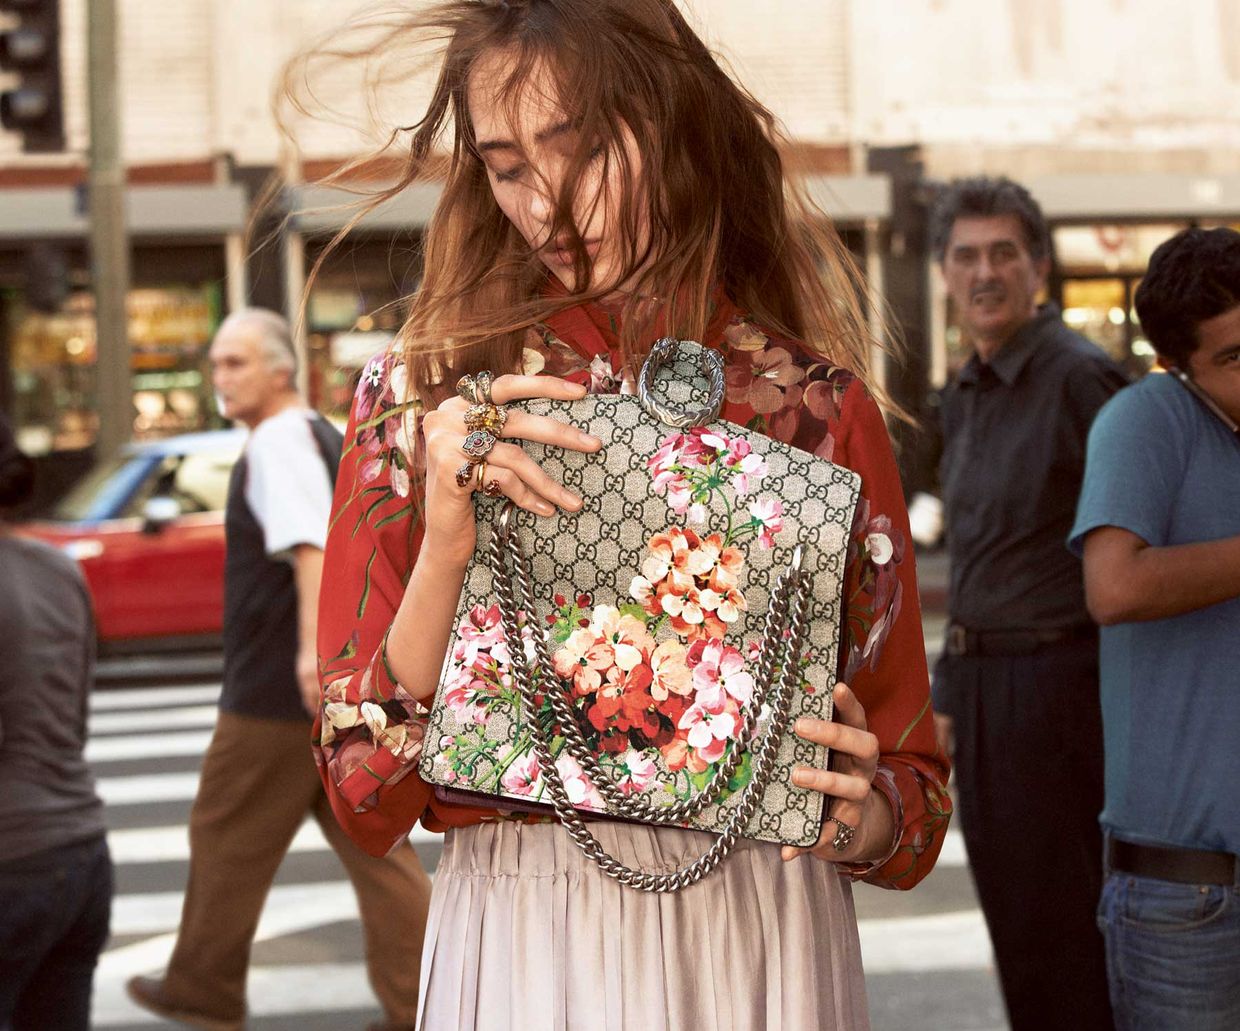 Gucci Bee Embroidered Medium Dionysus Bag